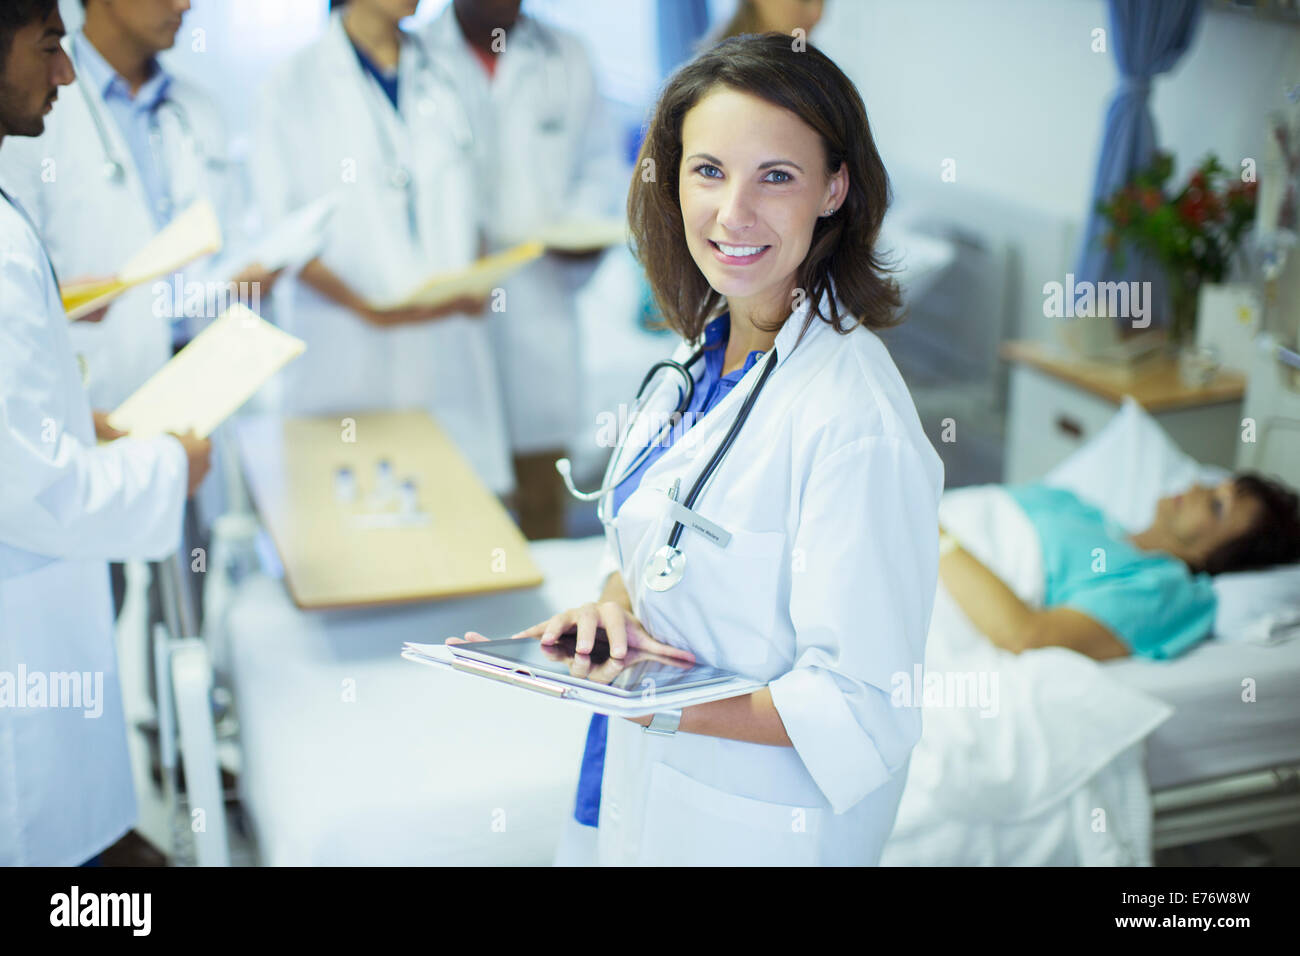 Doctor using digital tablet in hospital room Stock Photo